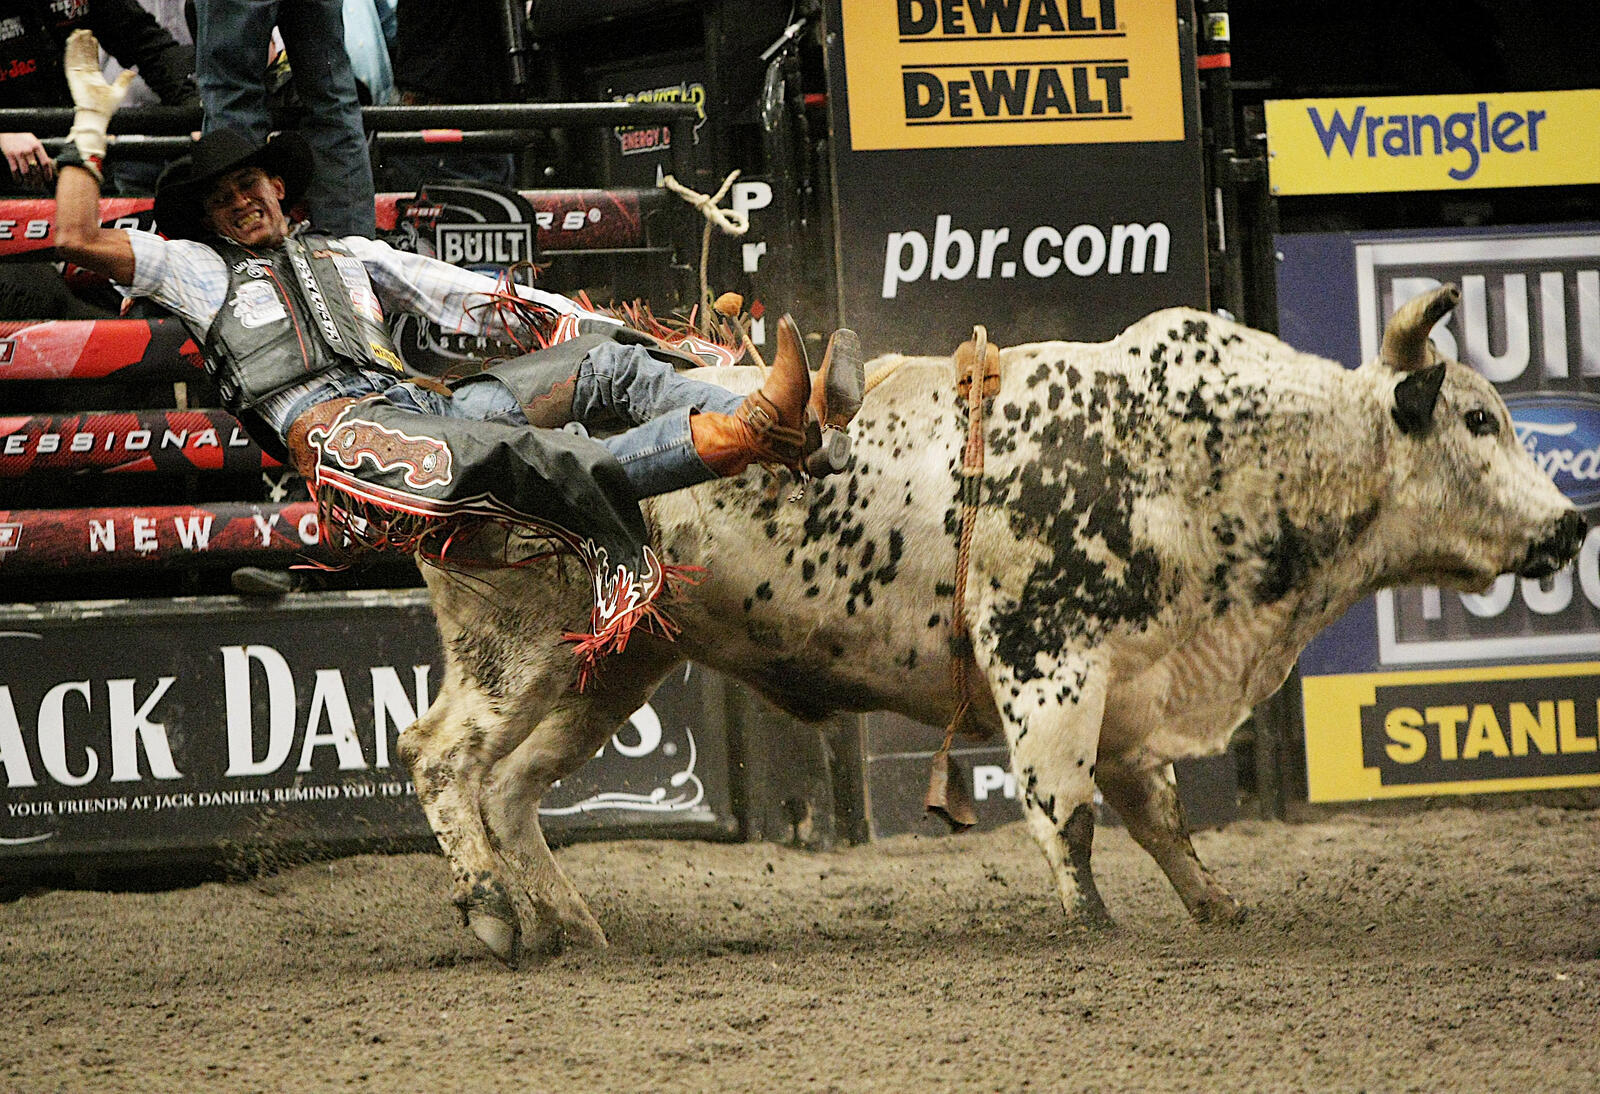 Free photo A man falls off a bull